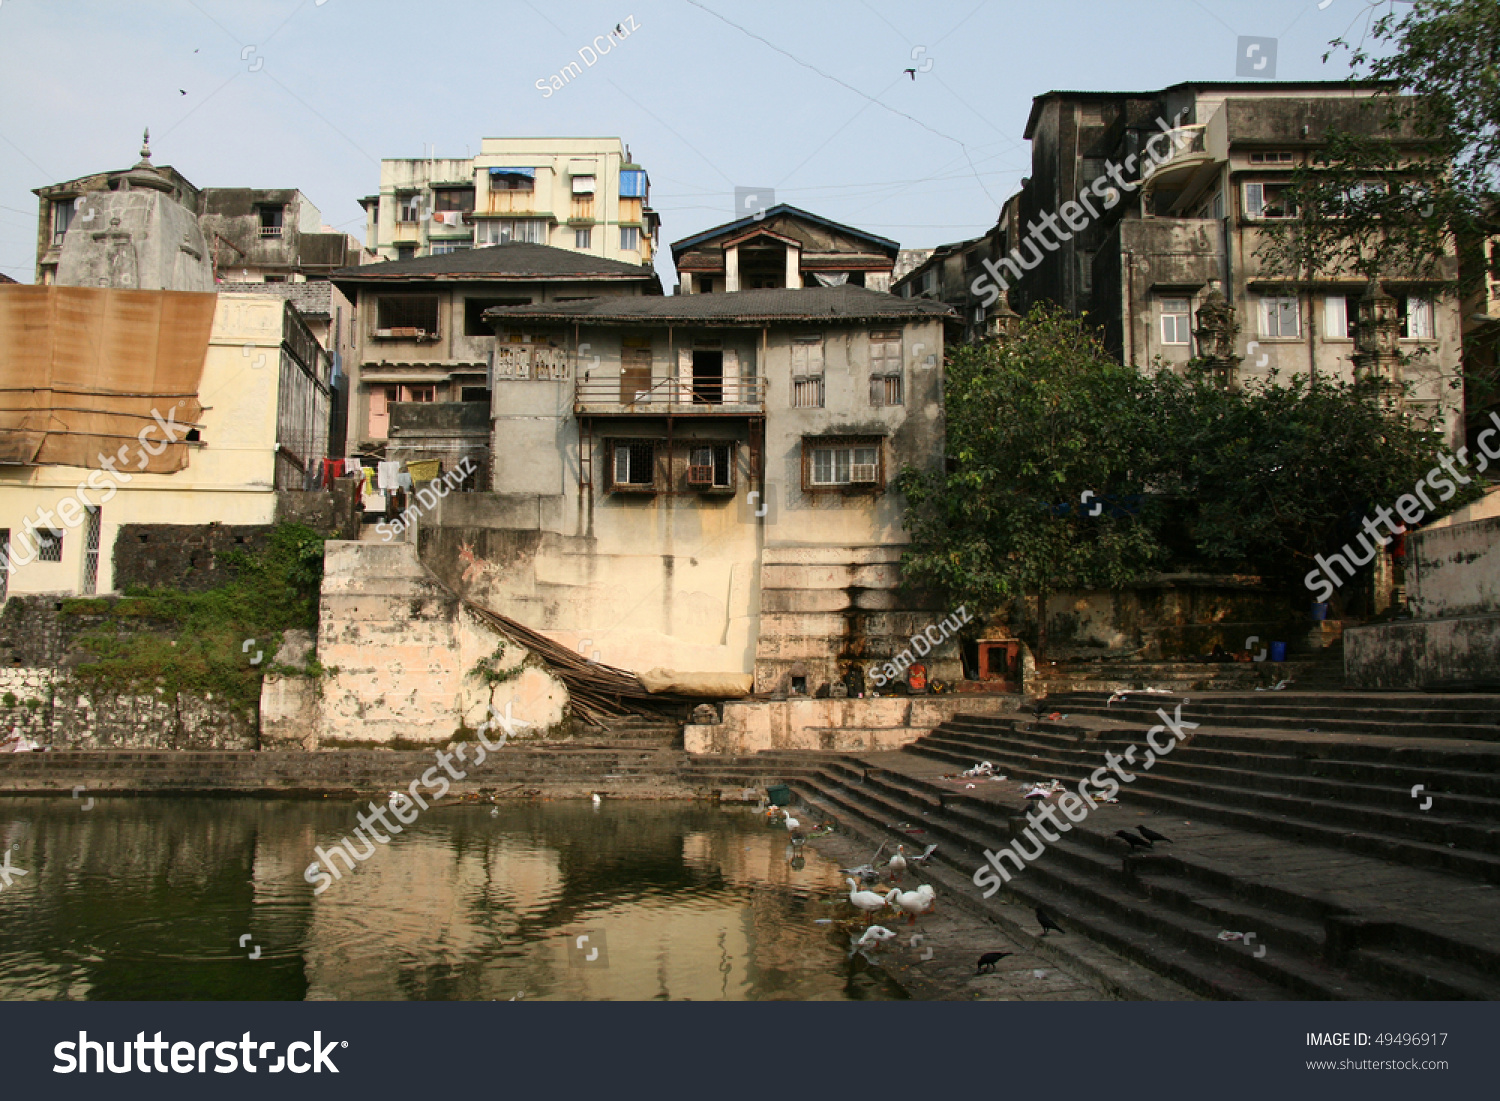 stock-photo-banaganga-tank-in-the-slums-of-the-city-mumbai-india-49496917.jpg